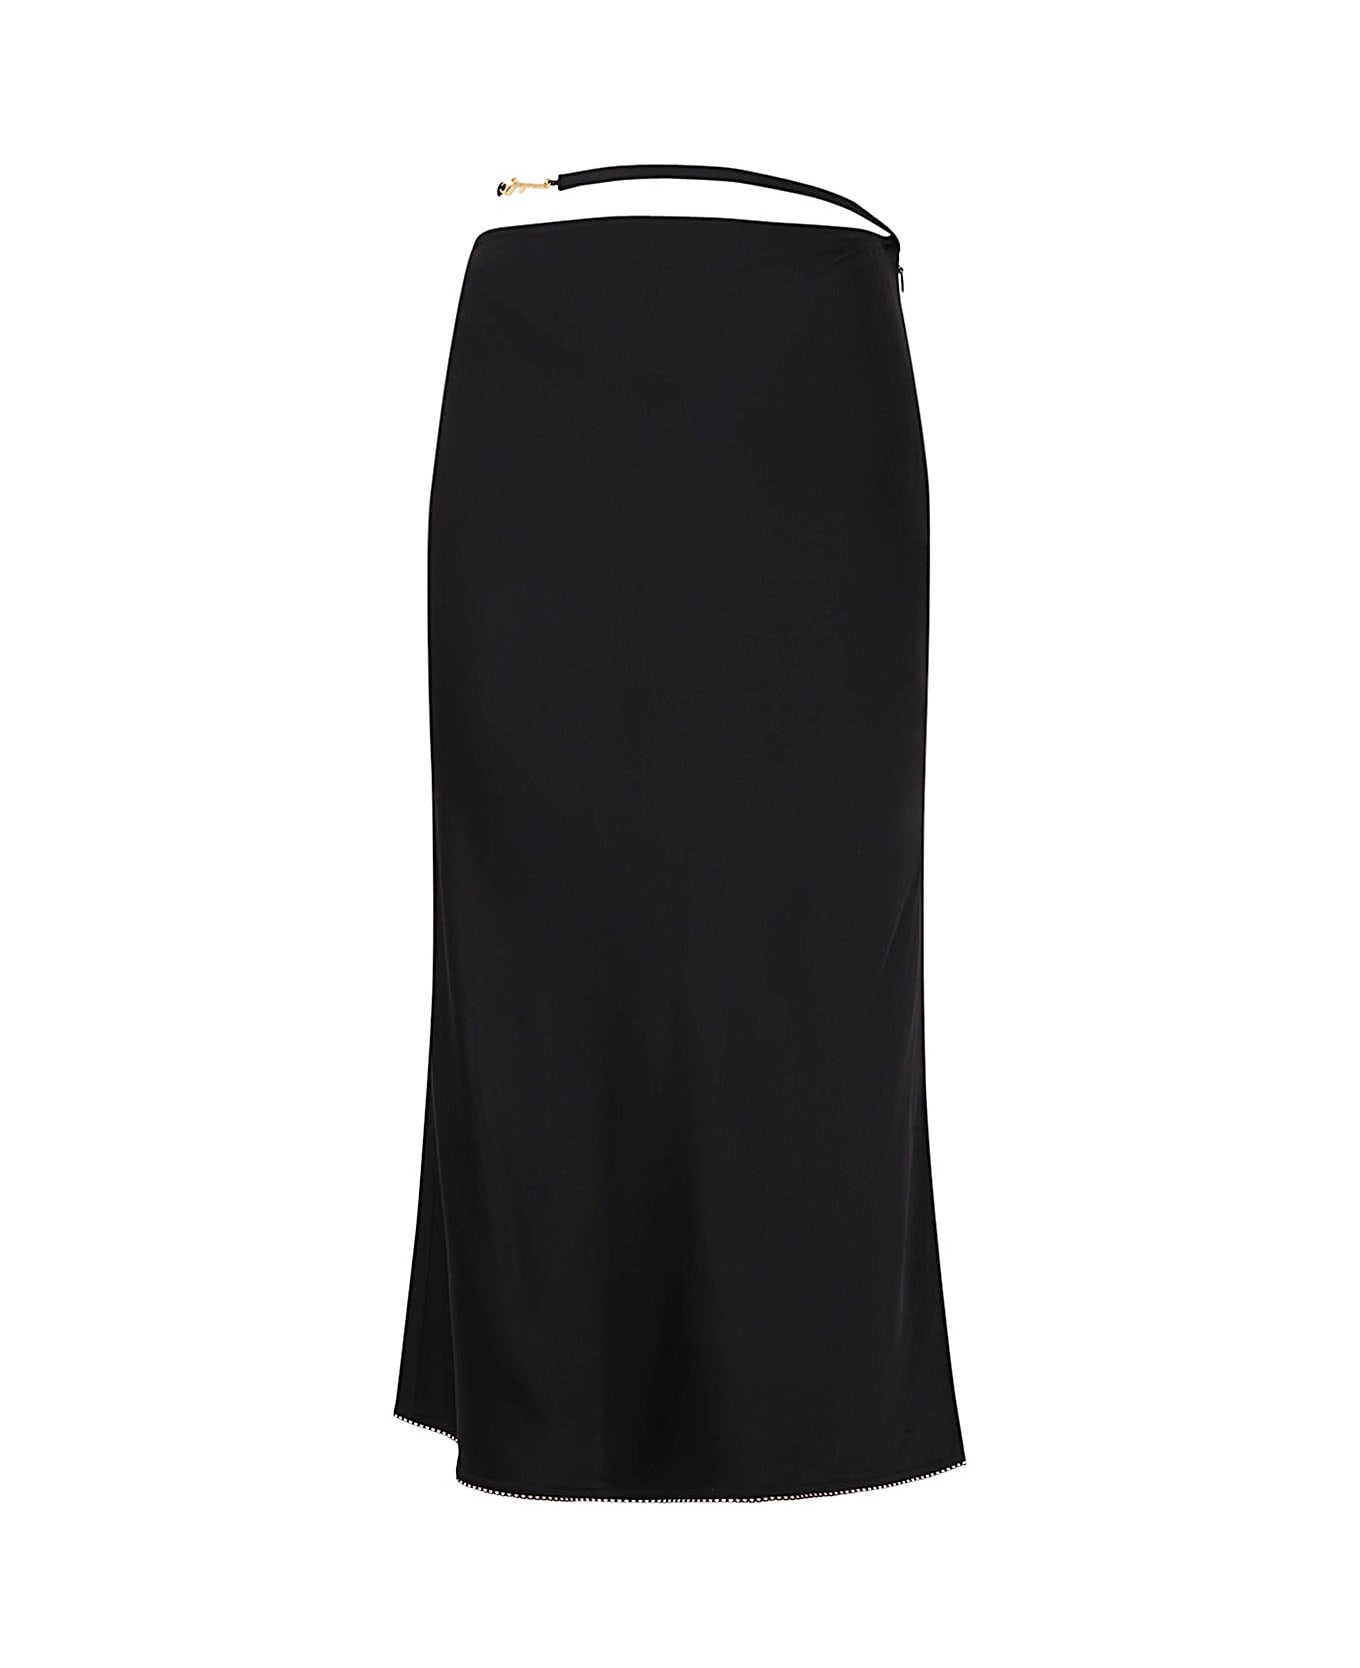 Jacquemus La Jupe Skirt - Black スカート